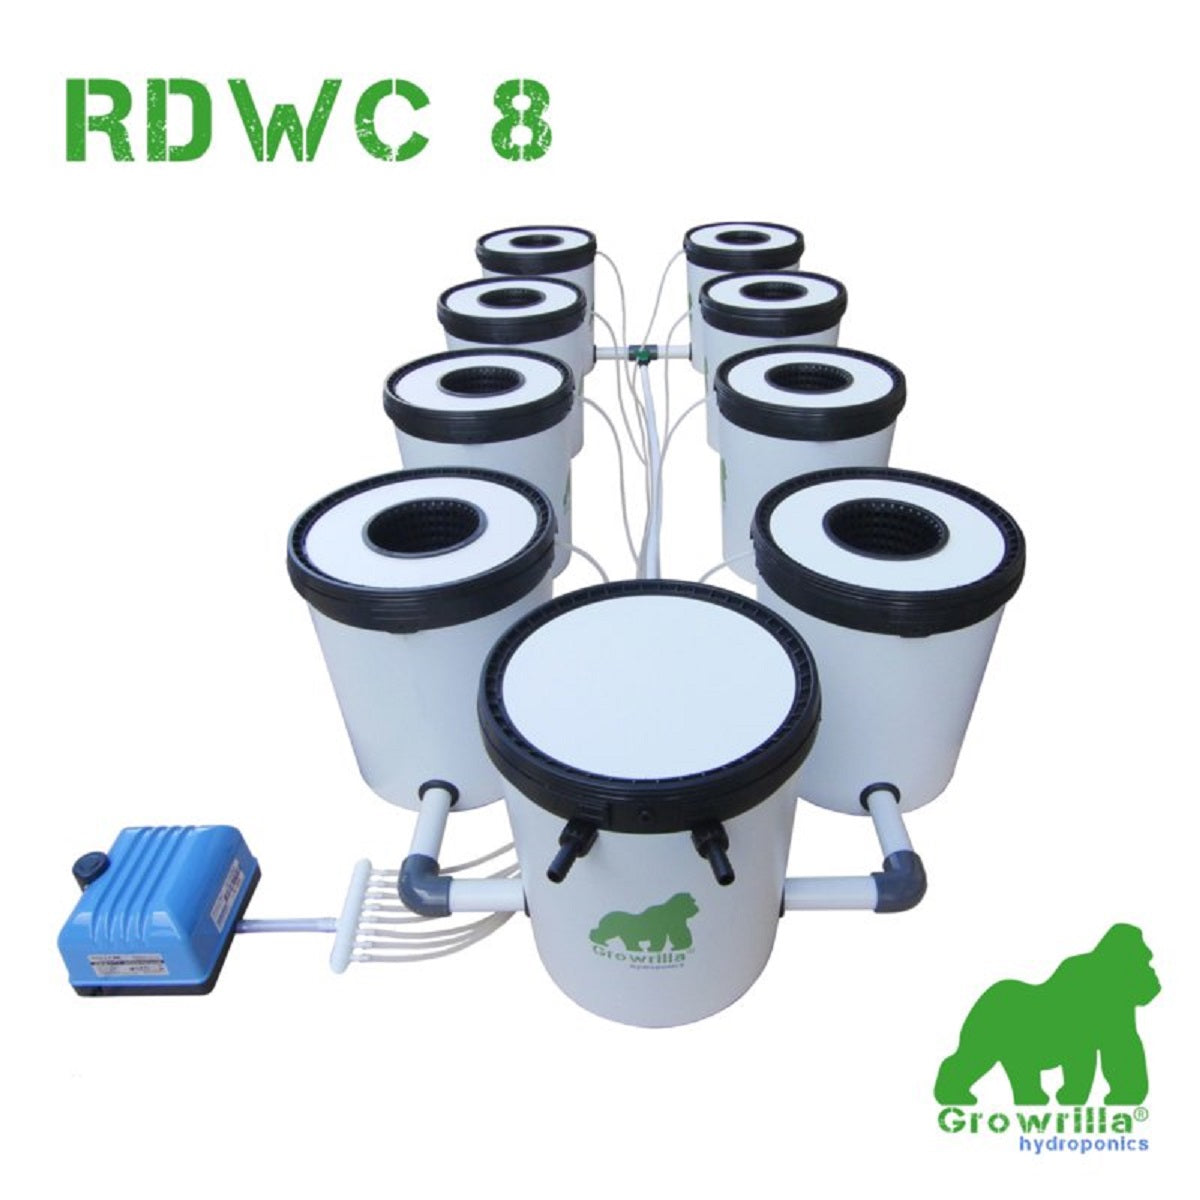 Growrilla 2.0 RDWC 8